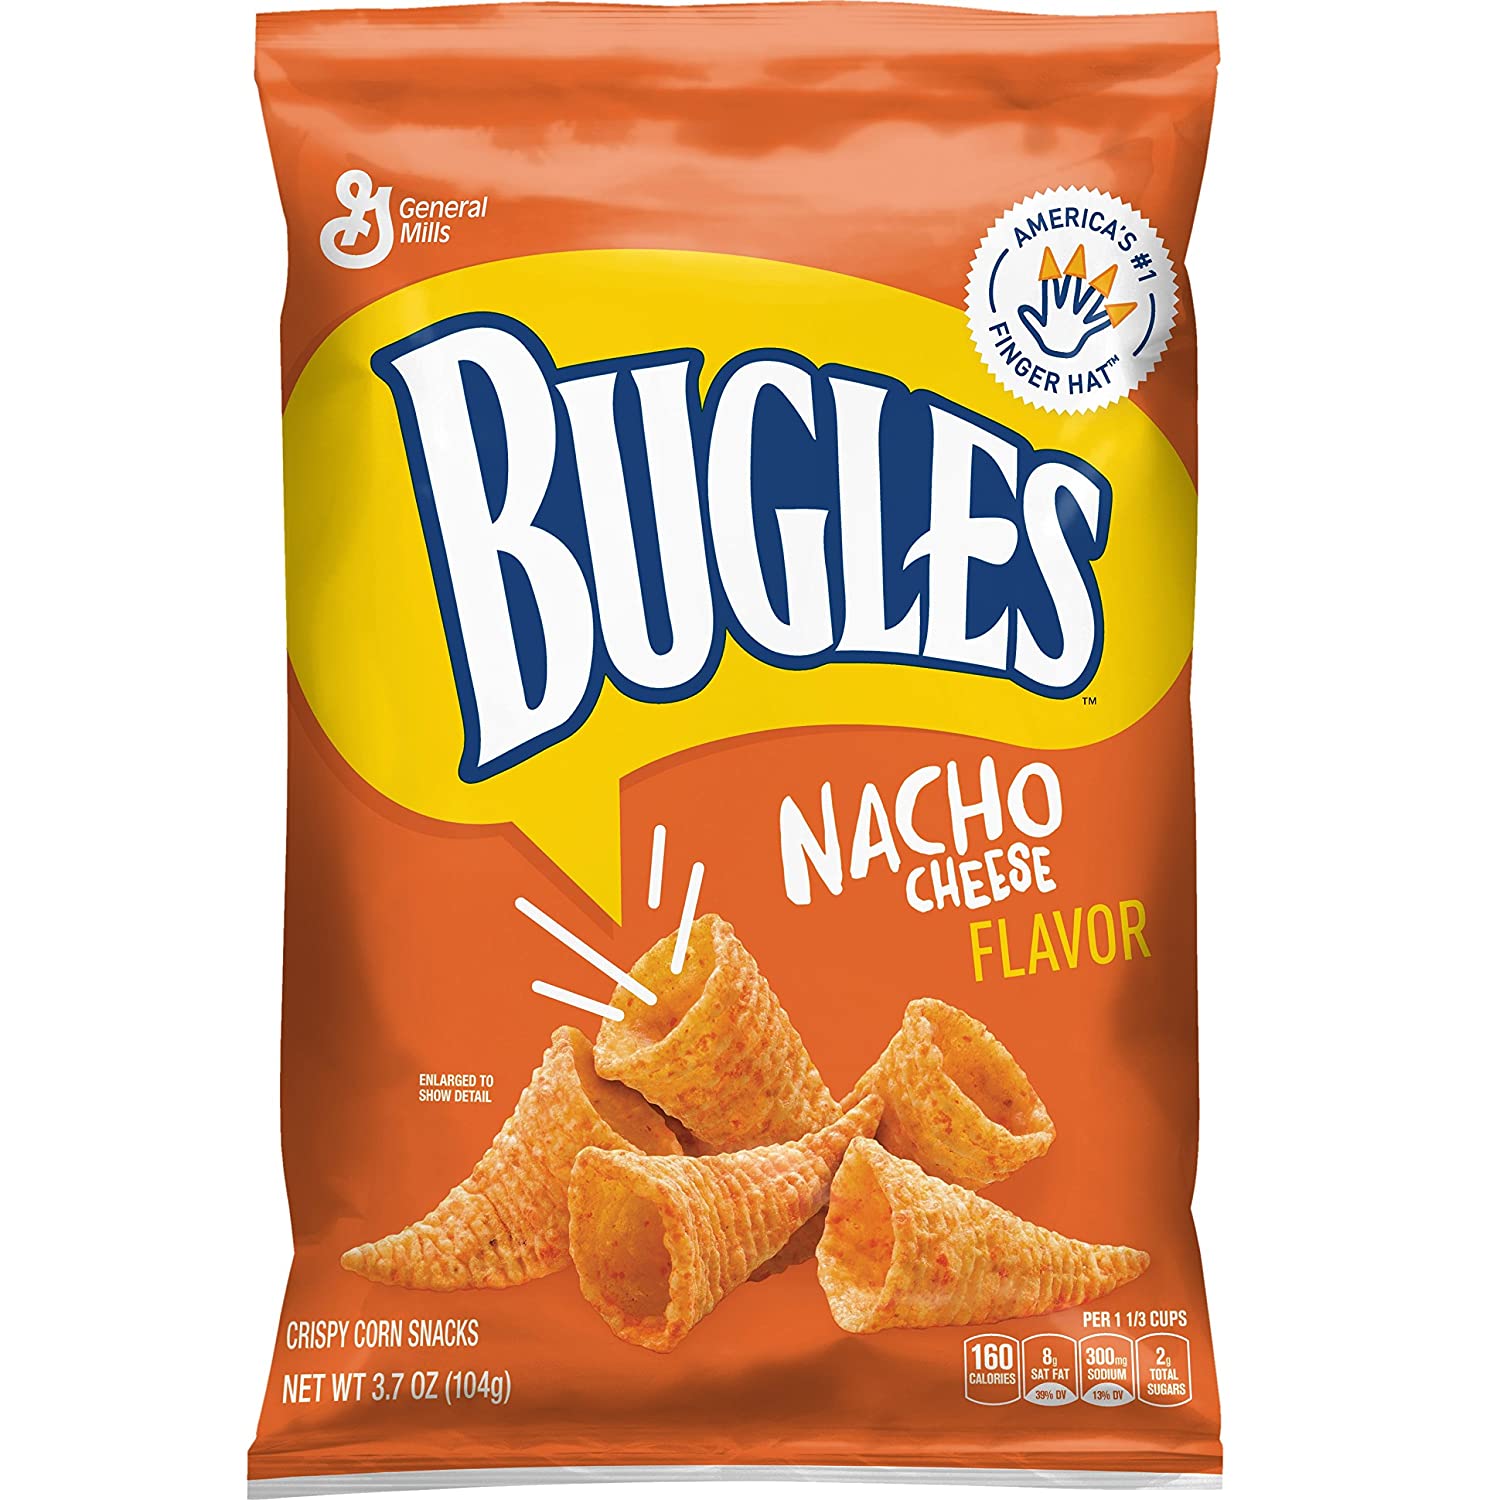 Gas Station Gourmet: Nacho Cheese Bugles